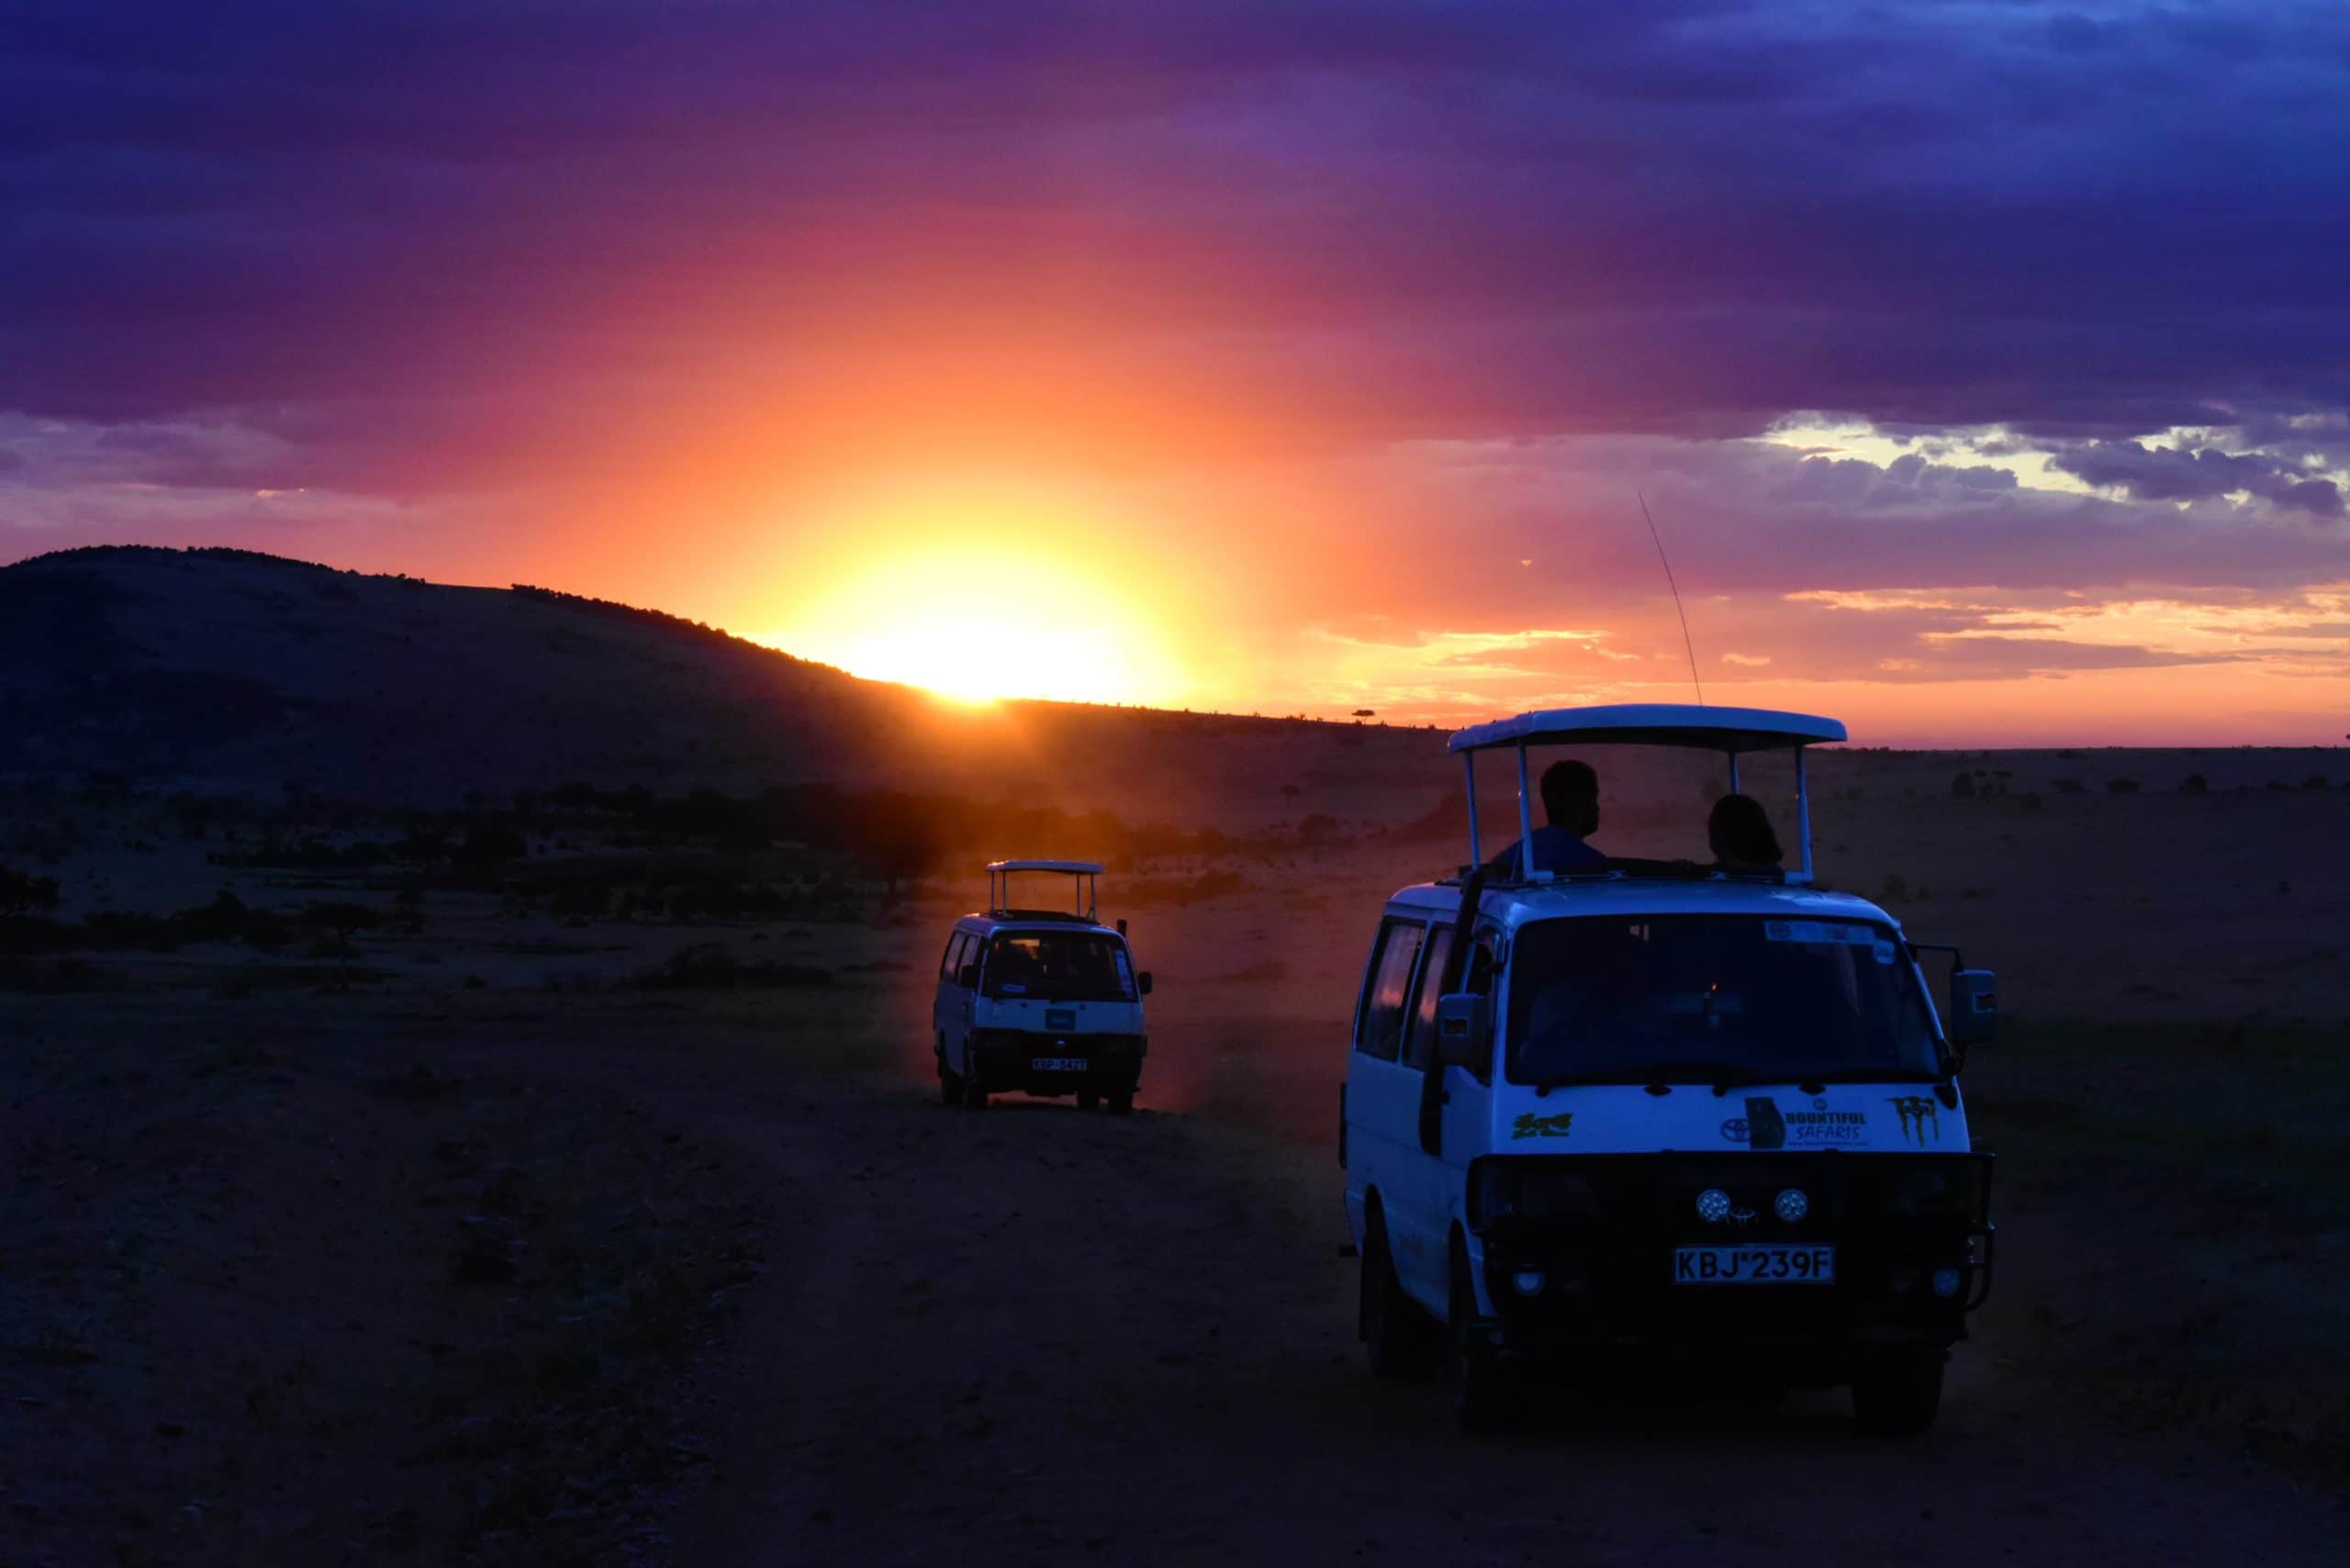 Watching a sunset in Tanzania